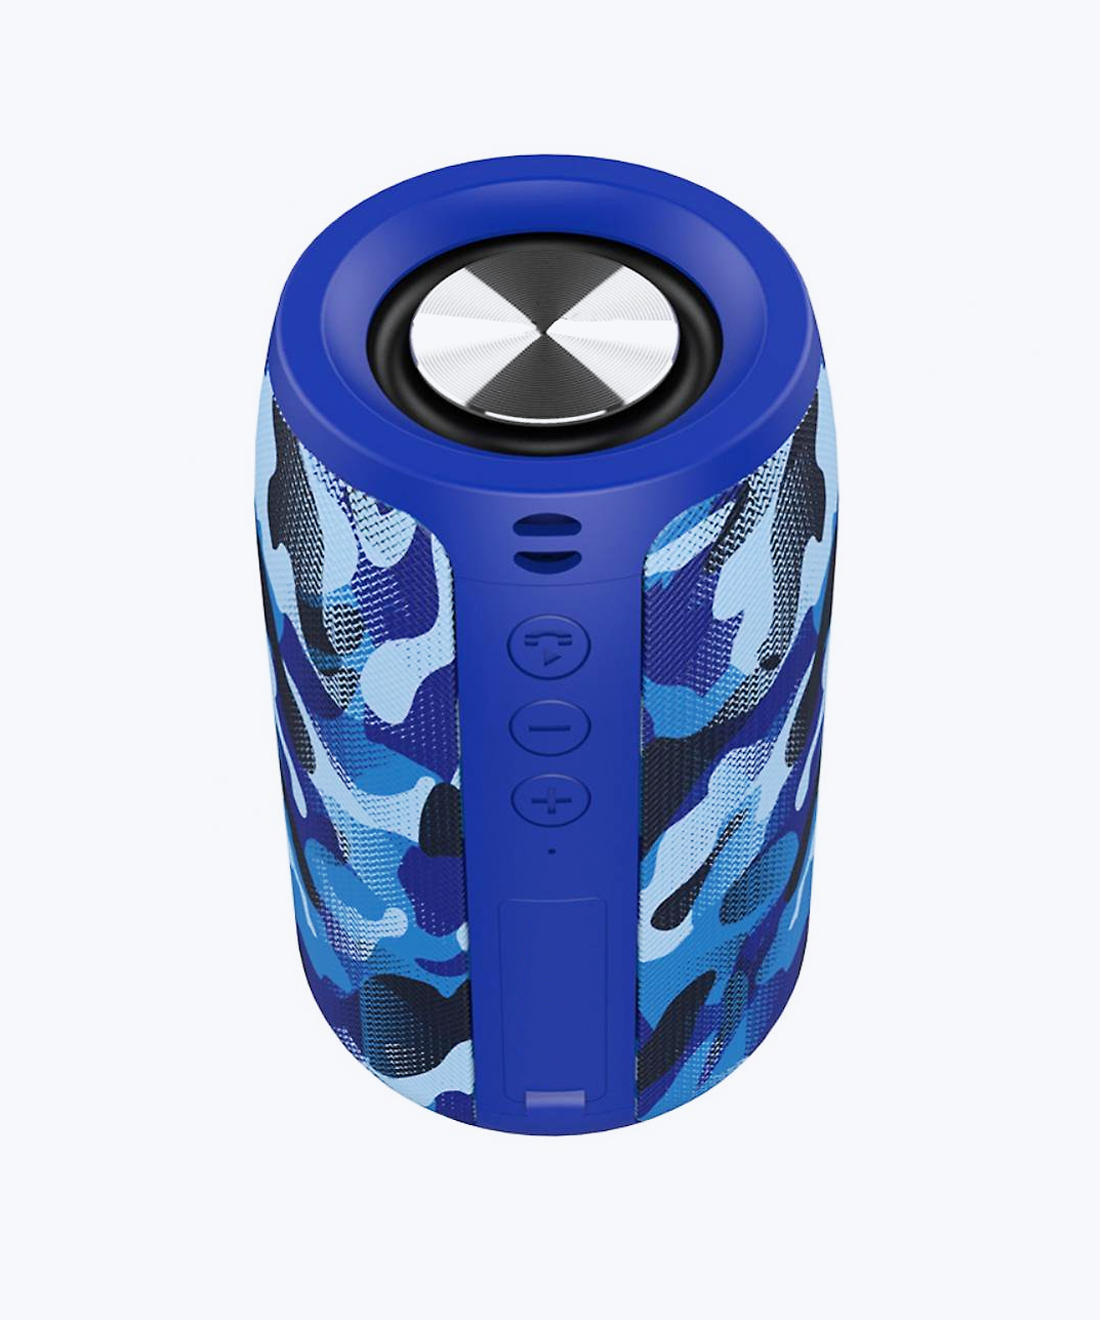 Camo bluetooth speaker